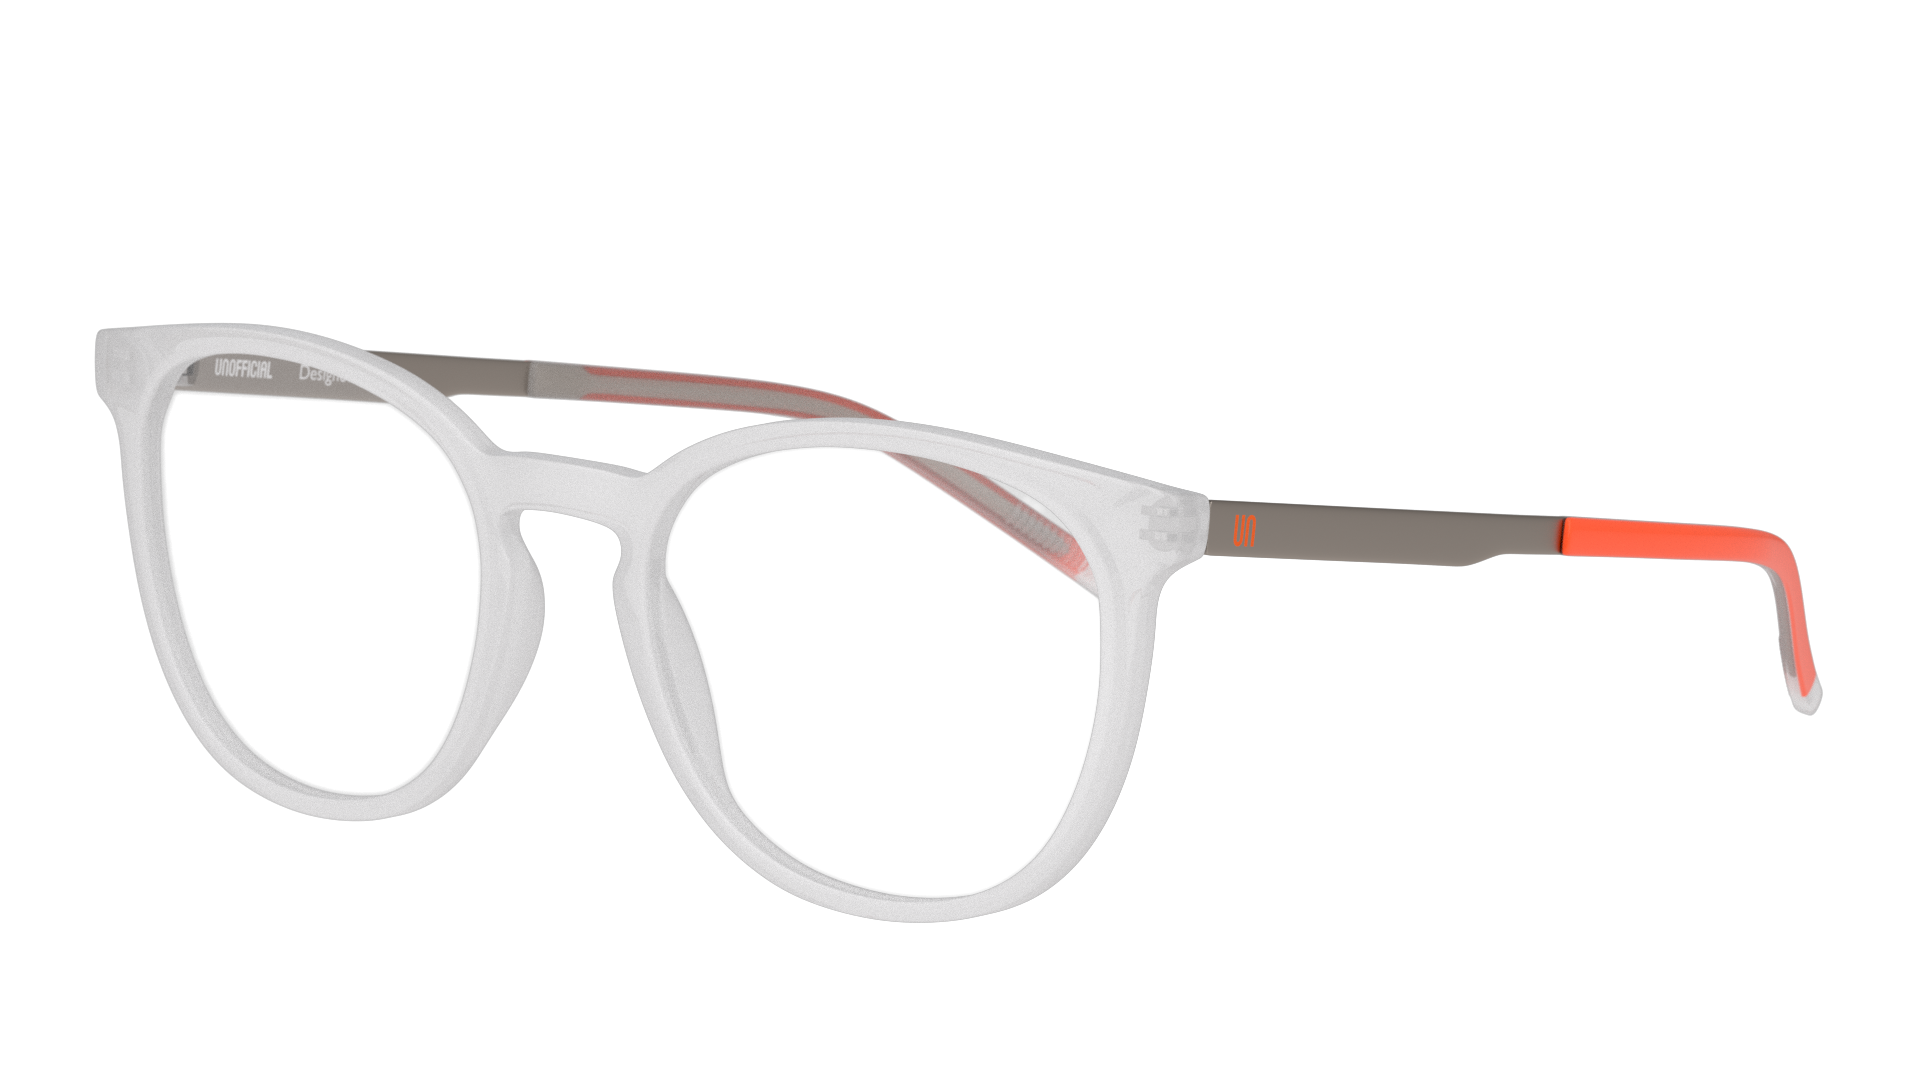 Angle_Left01 Unofficial UNOM0253 (TS00) Glasses Transparent / Transparent, White